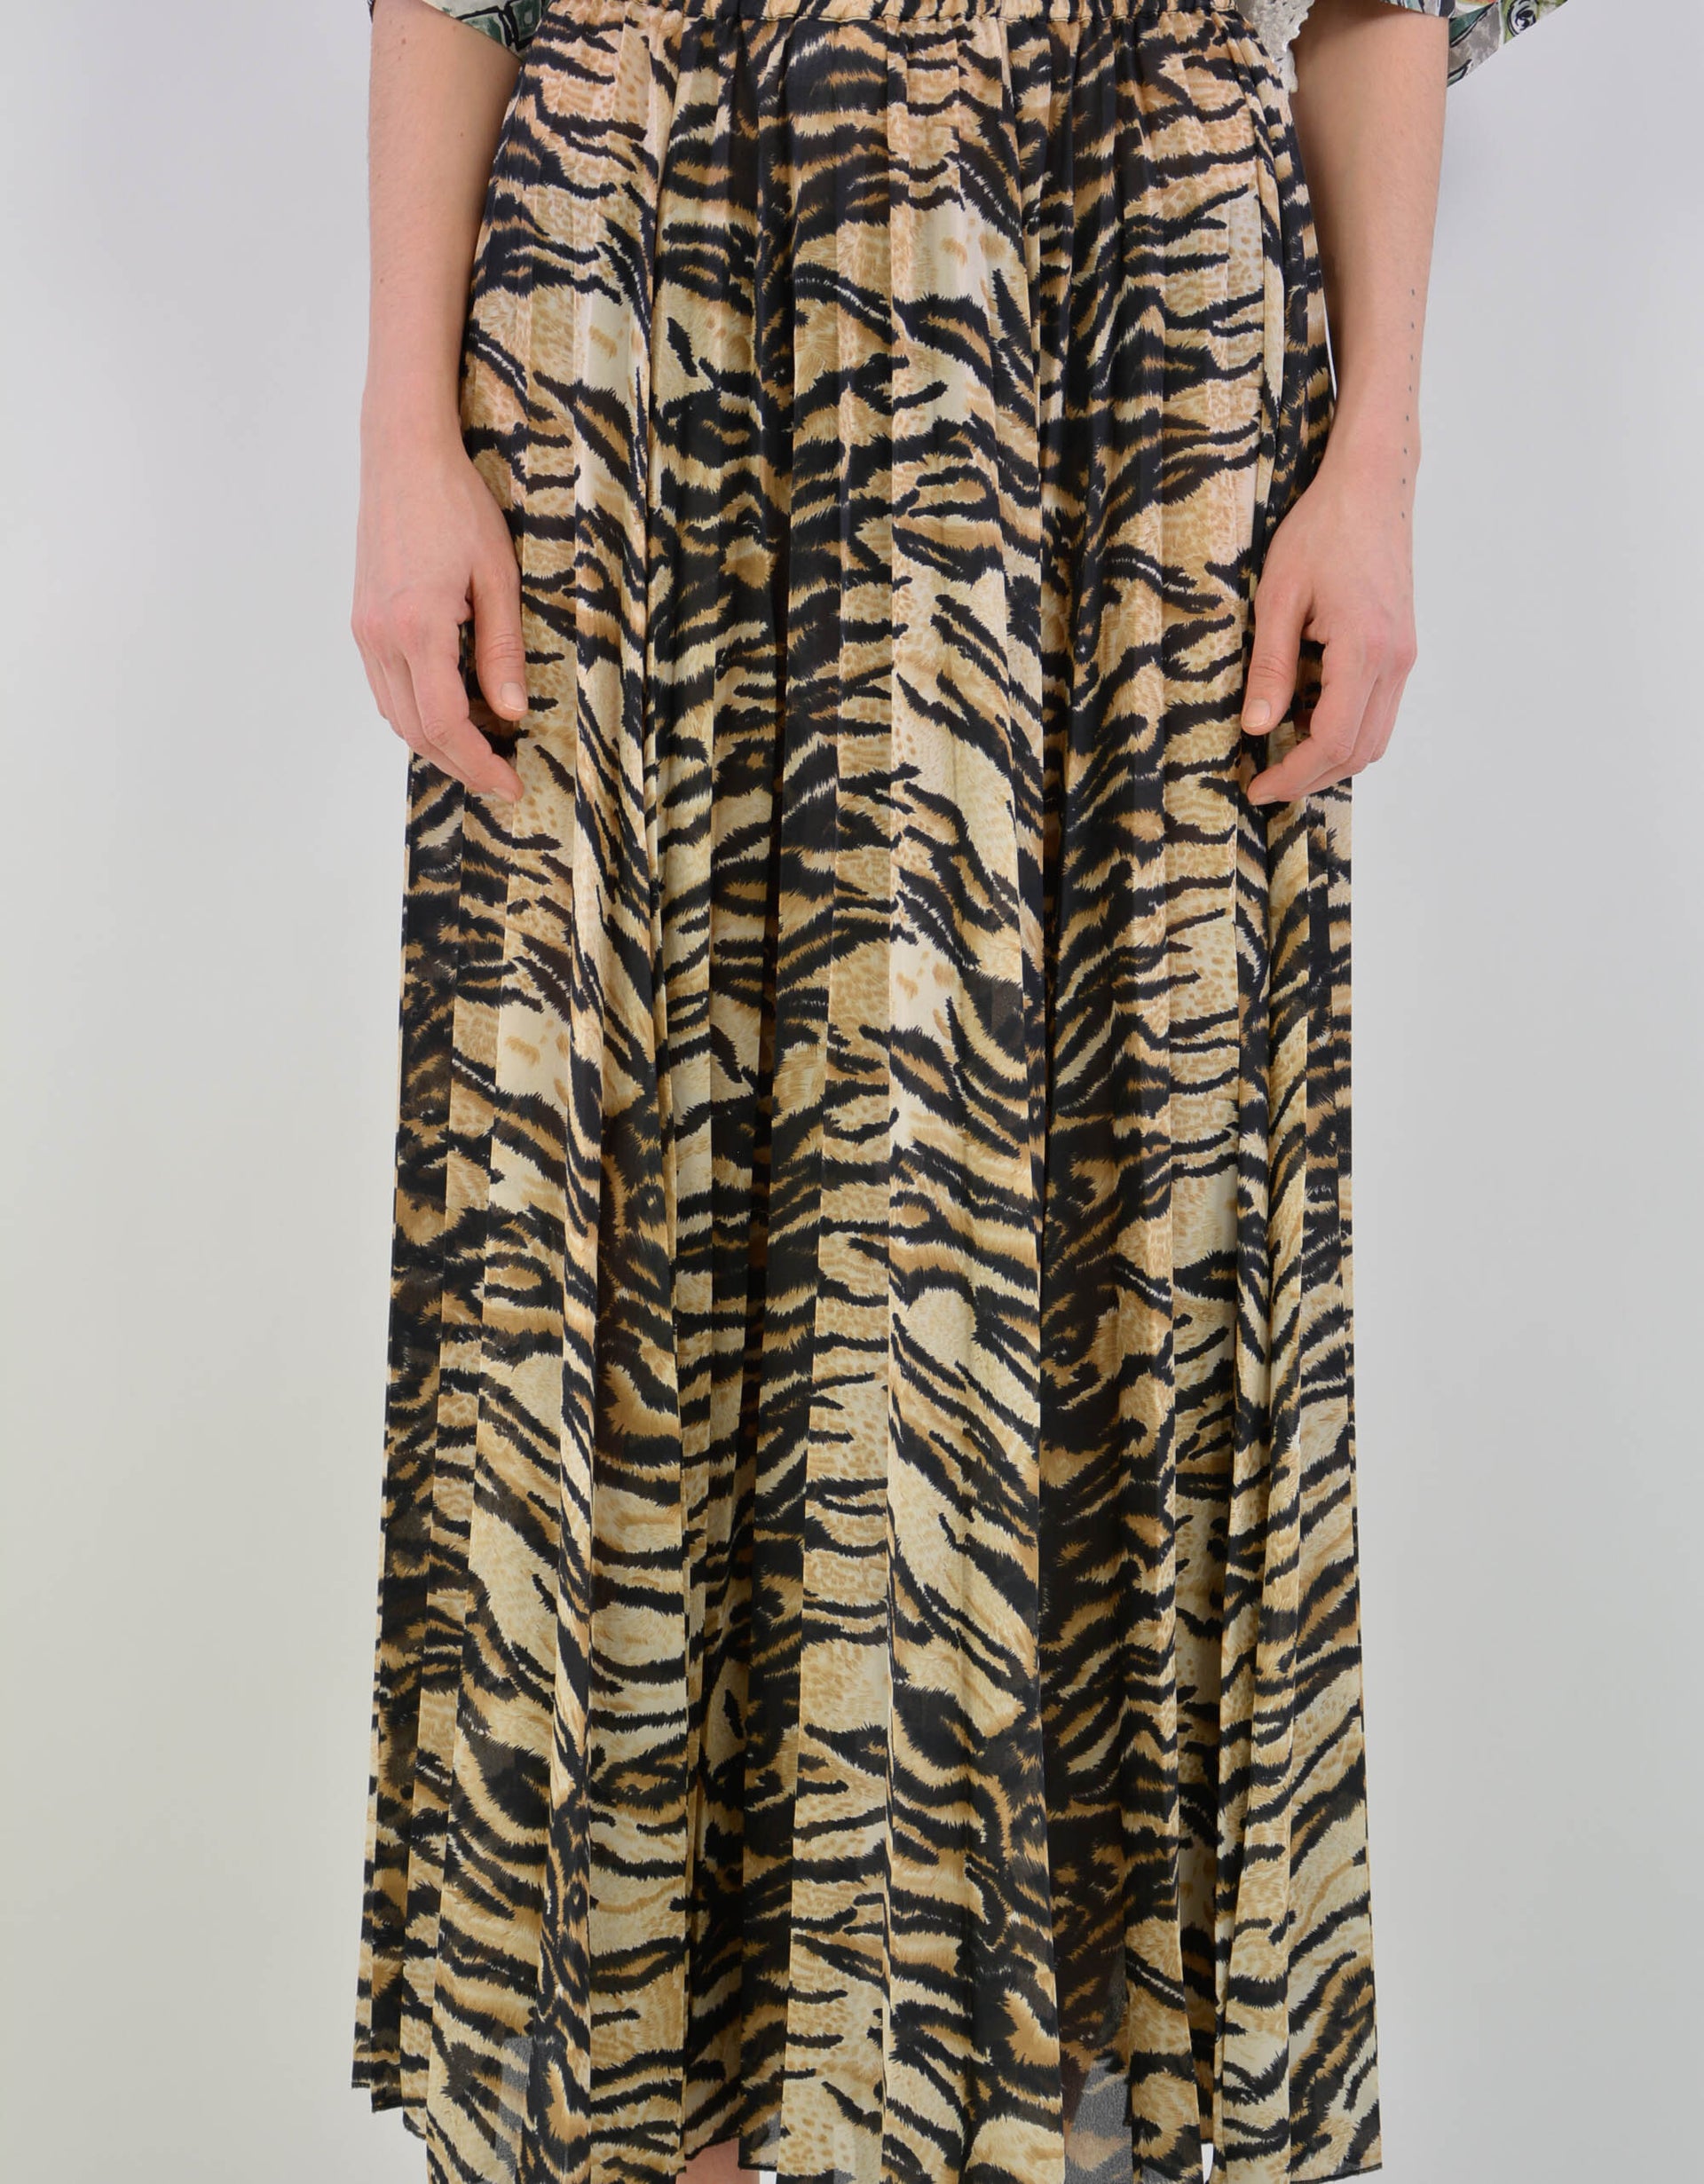 Leopard skirt - PICKNWEIGHT - VINTAGE KILO STORE